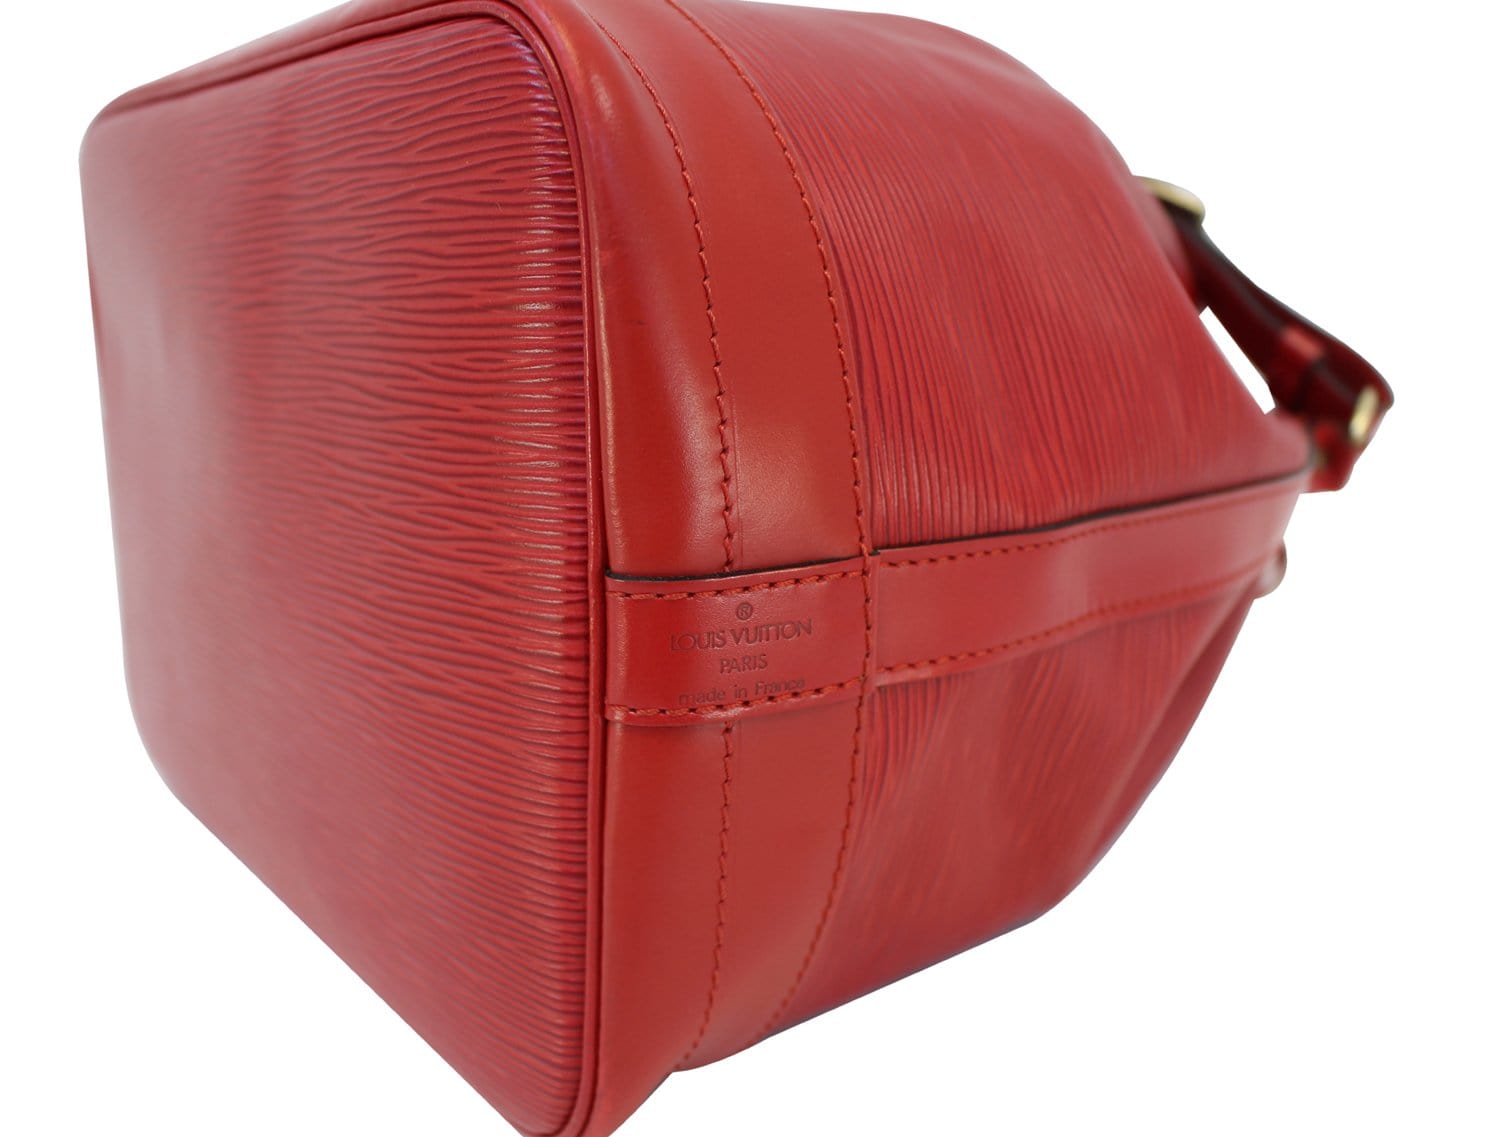 Auth LOUIS VUITTON Epi Tailley Tote Handbag Shoulder Bag Red/Navy M53544  99440g